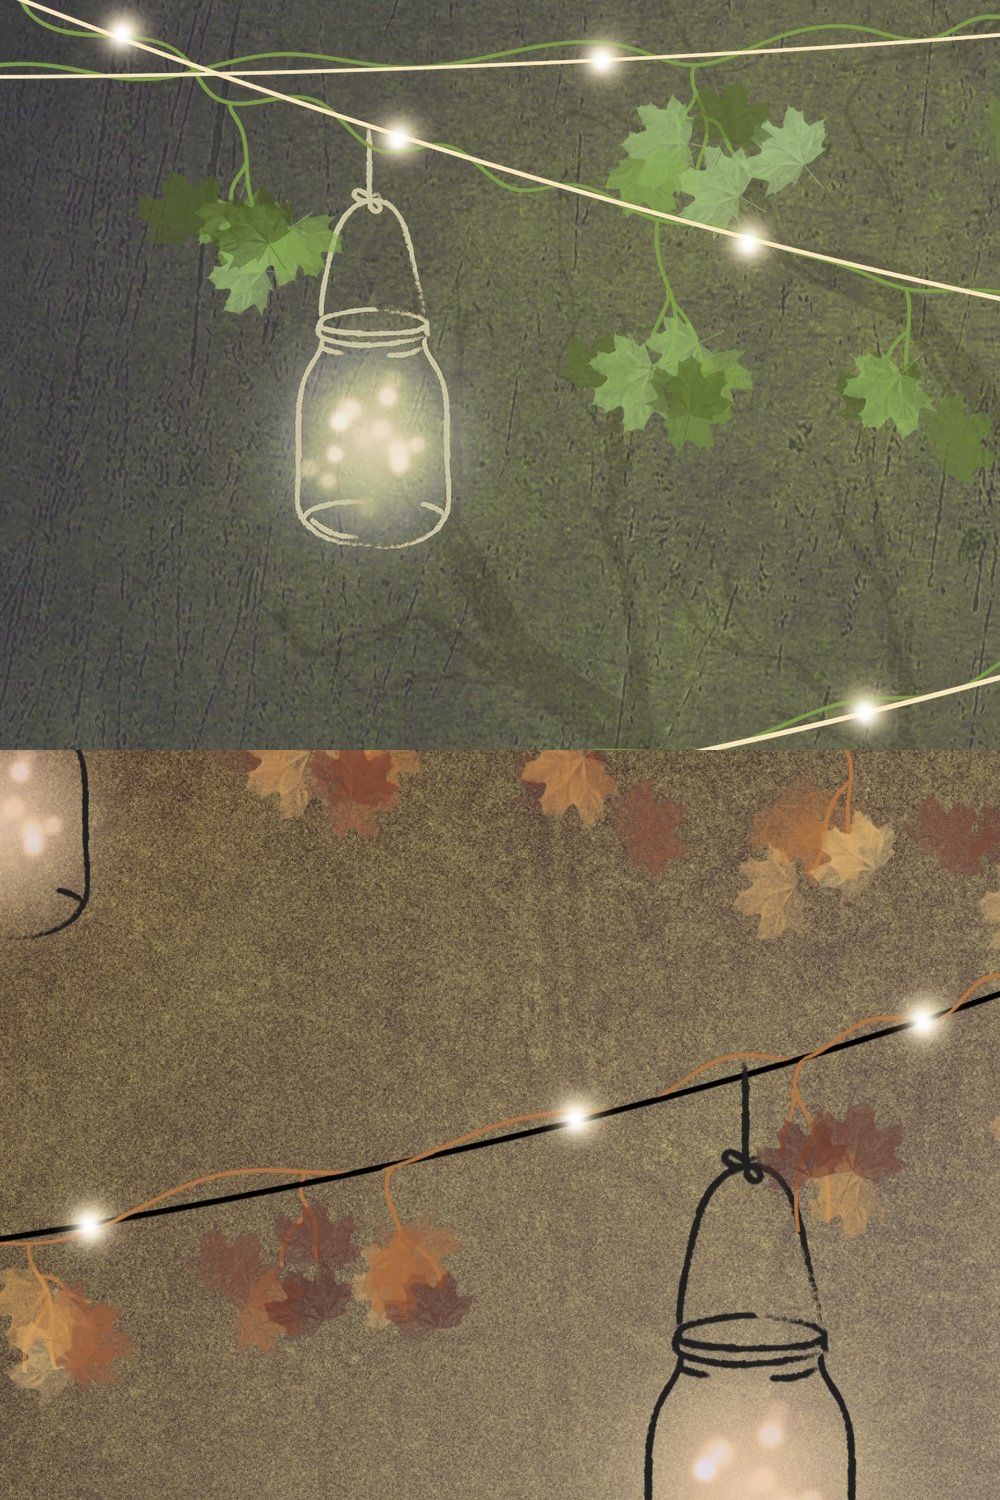 Mason jar lights + vines overlays pinterest preview image.